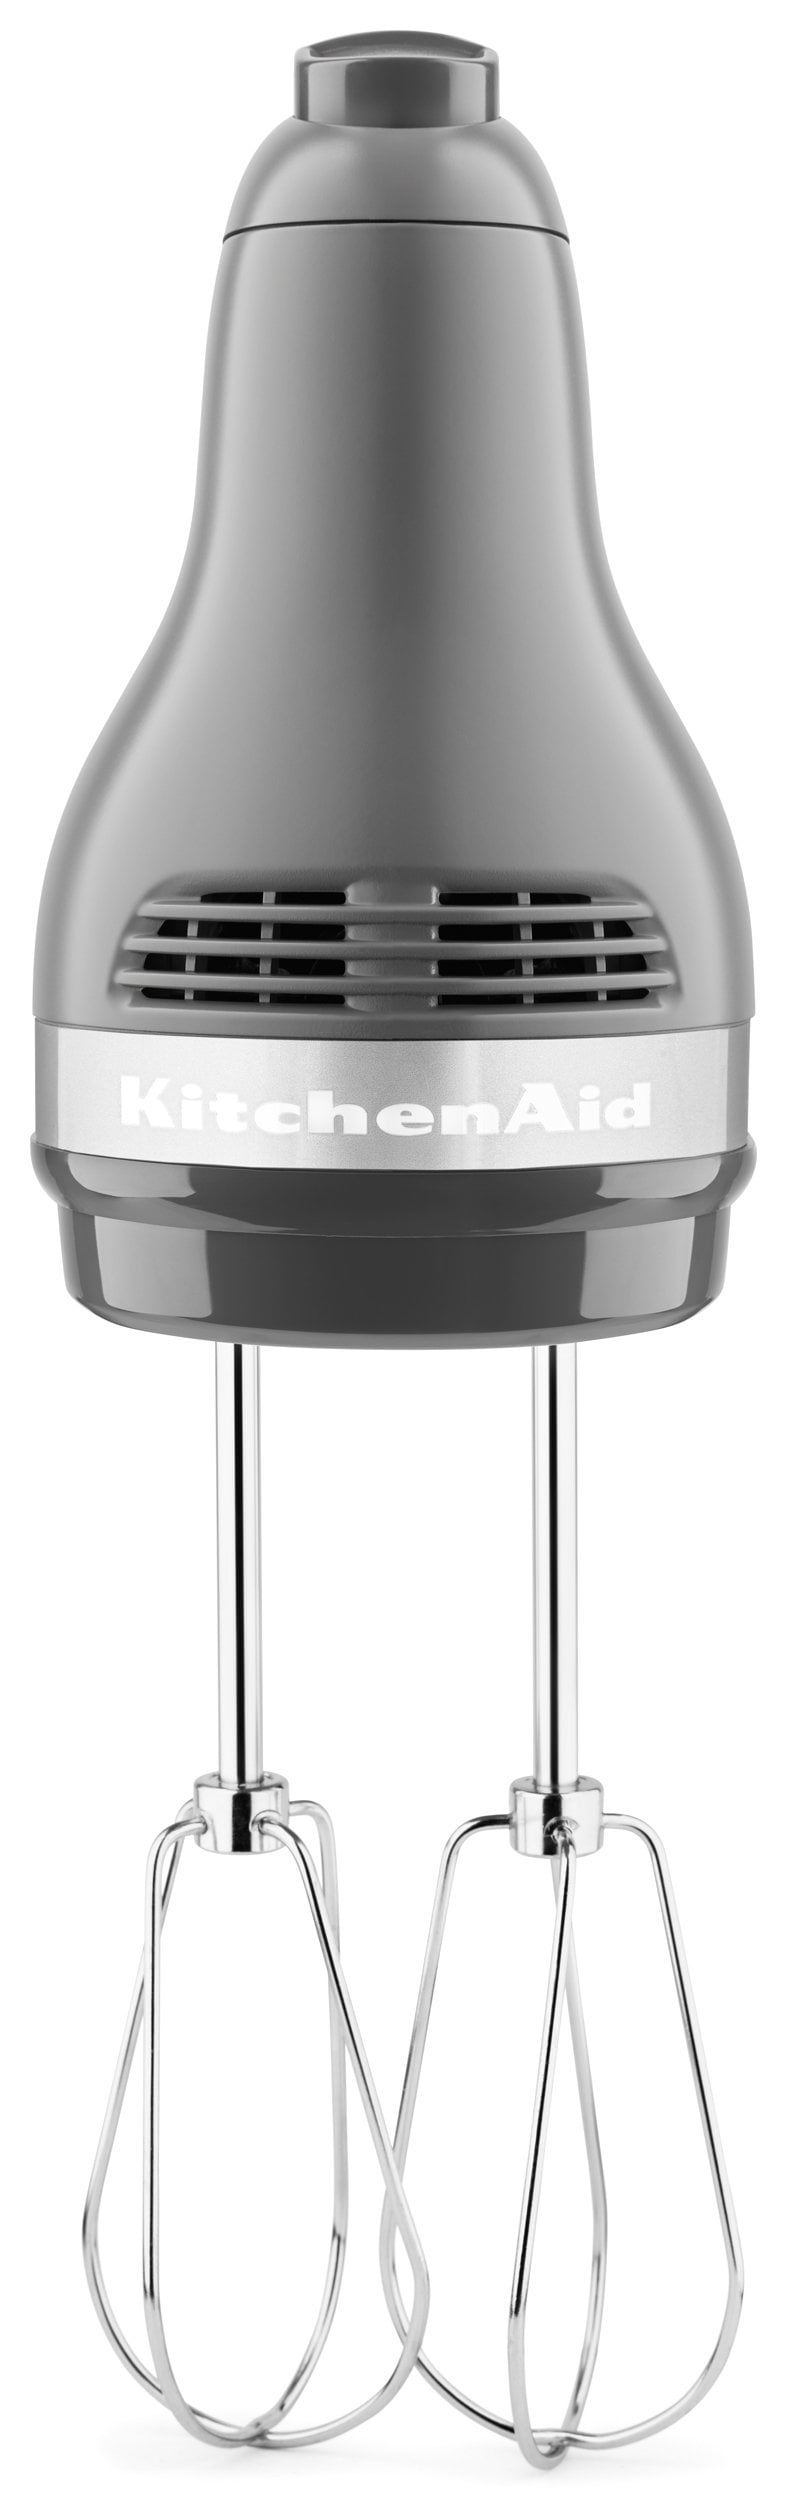 KitchenAid 5-Speed Ultra Power™ Hand Mixer, KHM512 